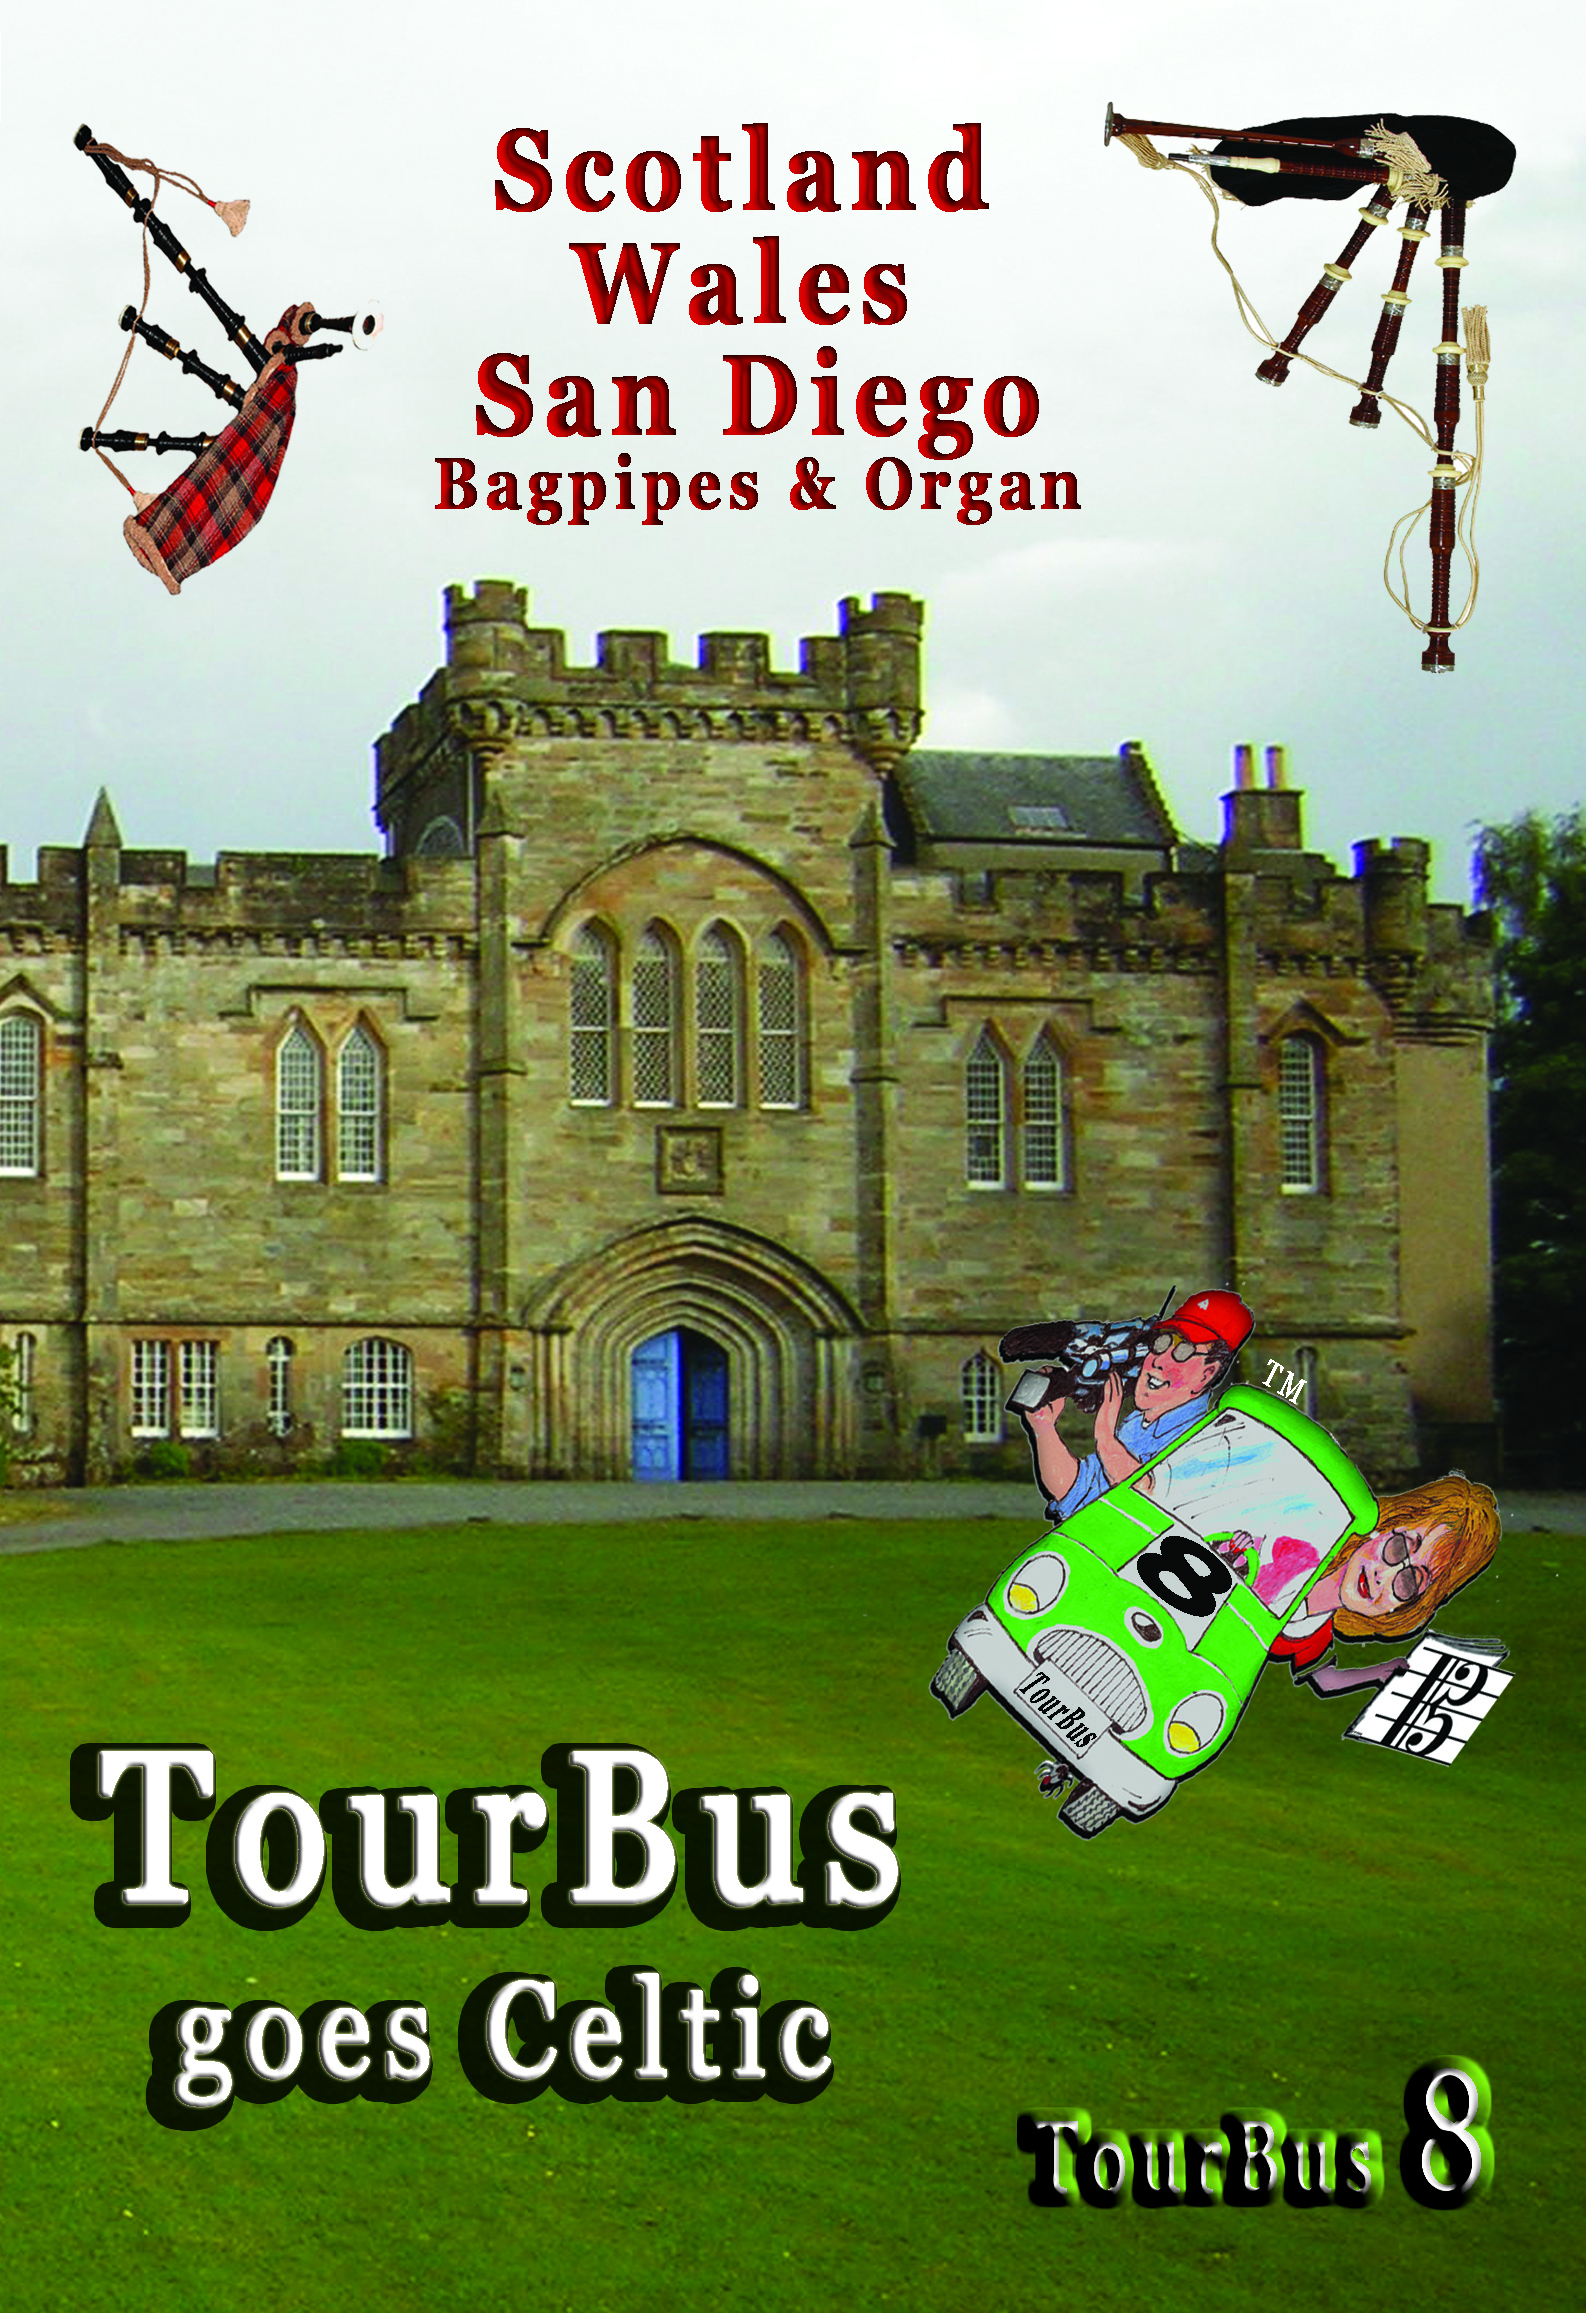 TourBus goes Celtic
                    - Bagpip[es & Organ